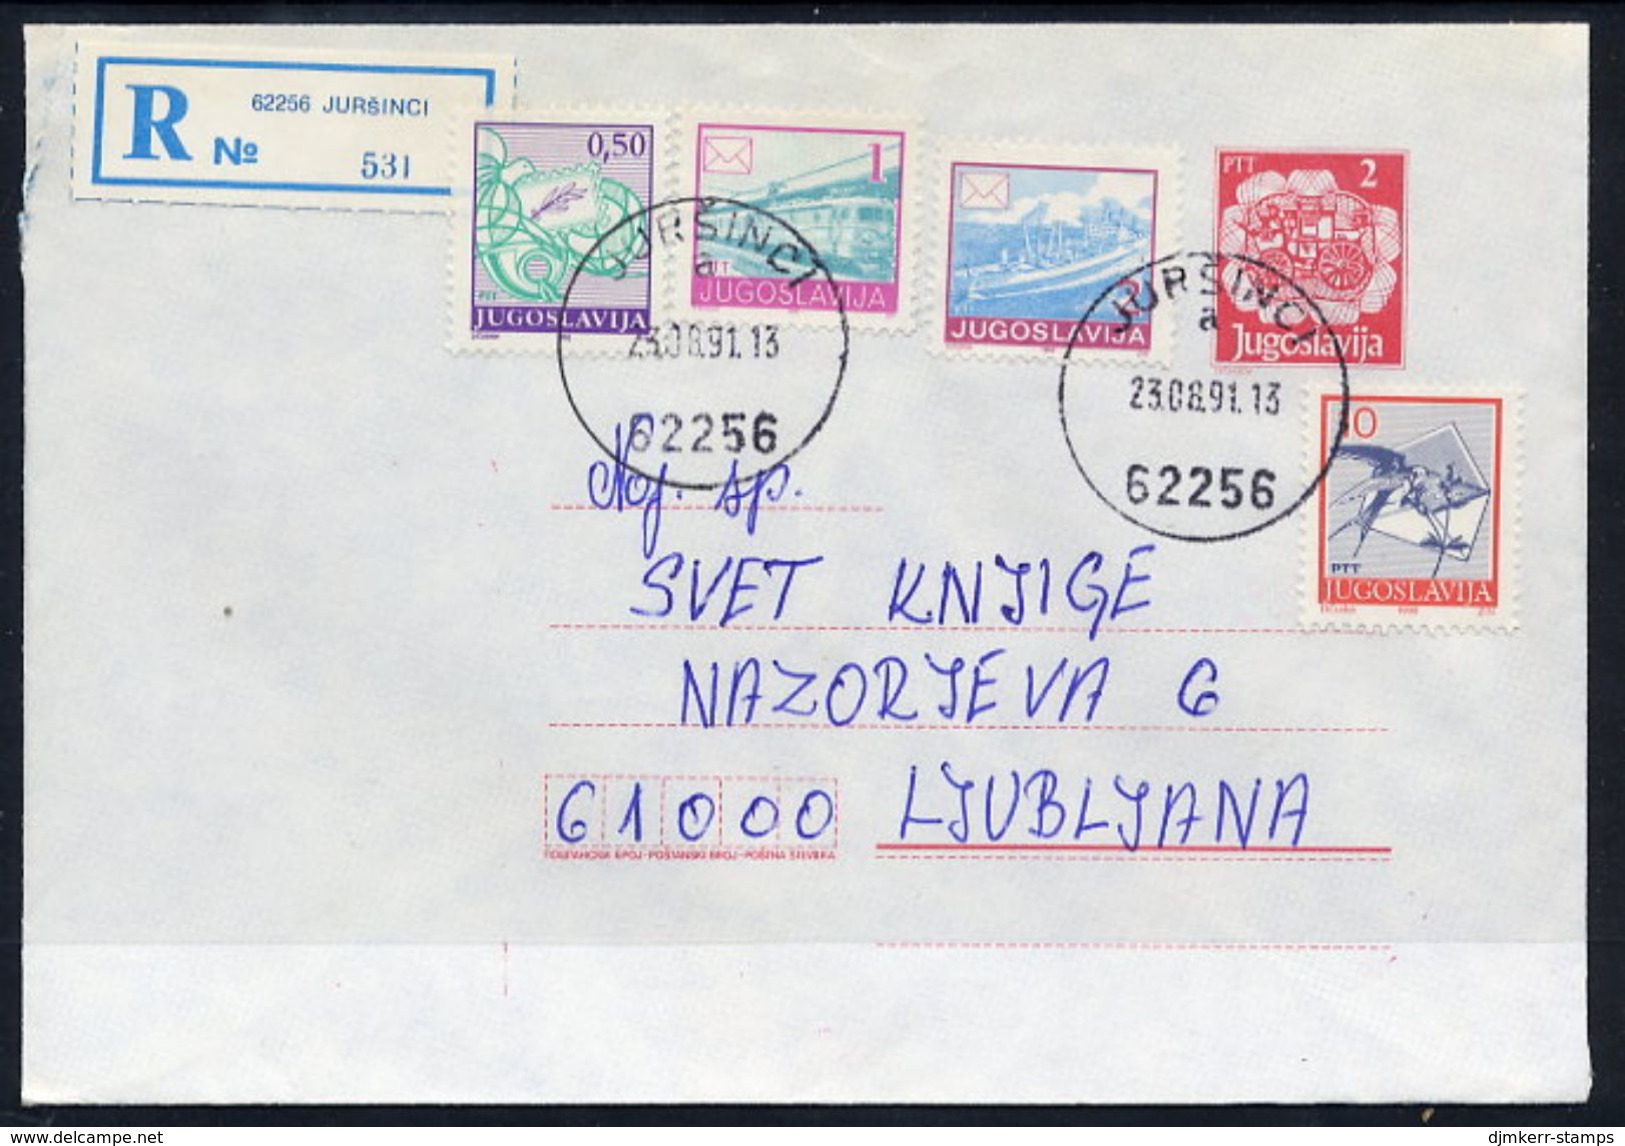 YUGOSLAVIA 1990 Mailcoach 2 D. Stationery Envelope Used With Additional Franking.  Michel U96 - Postal Stationery